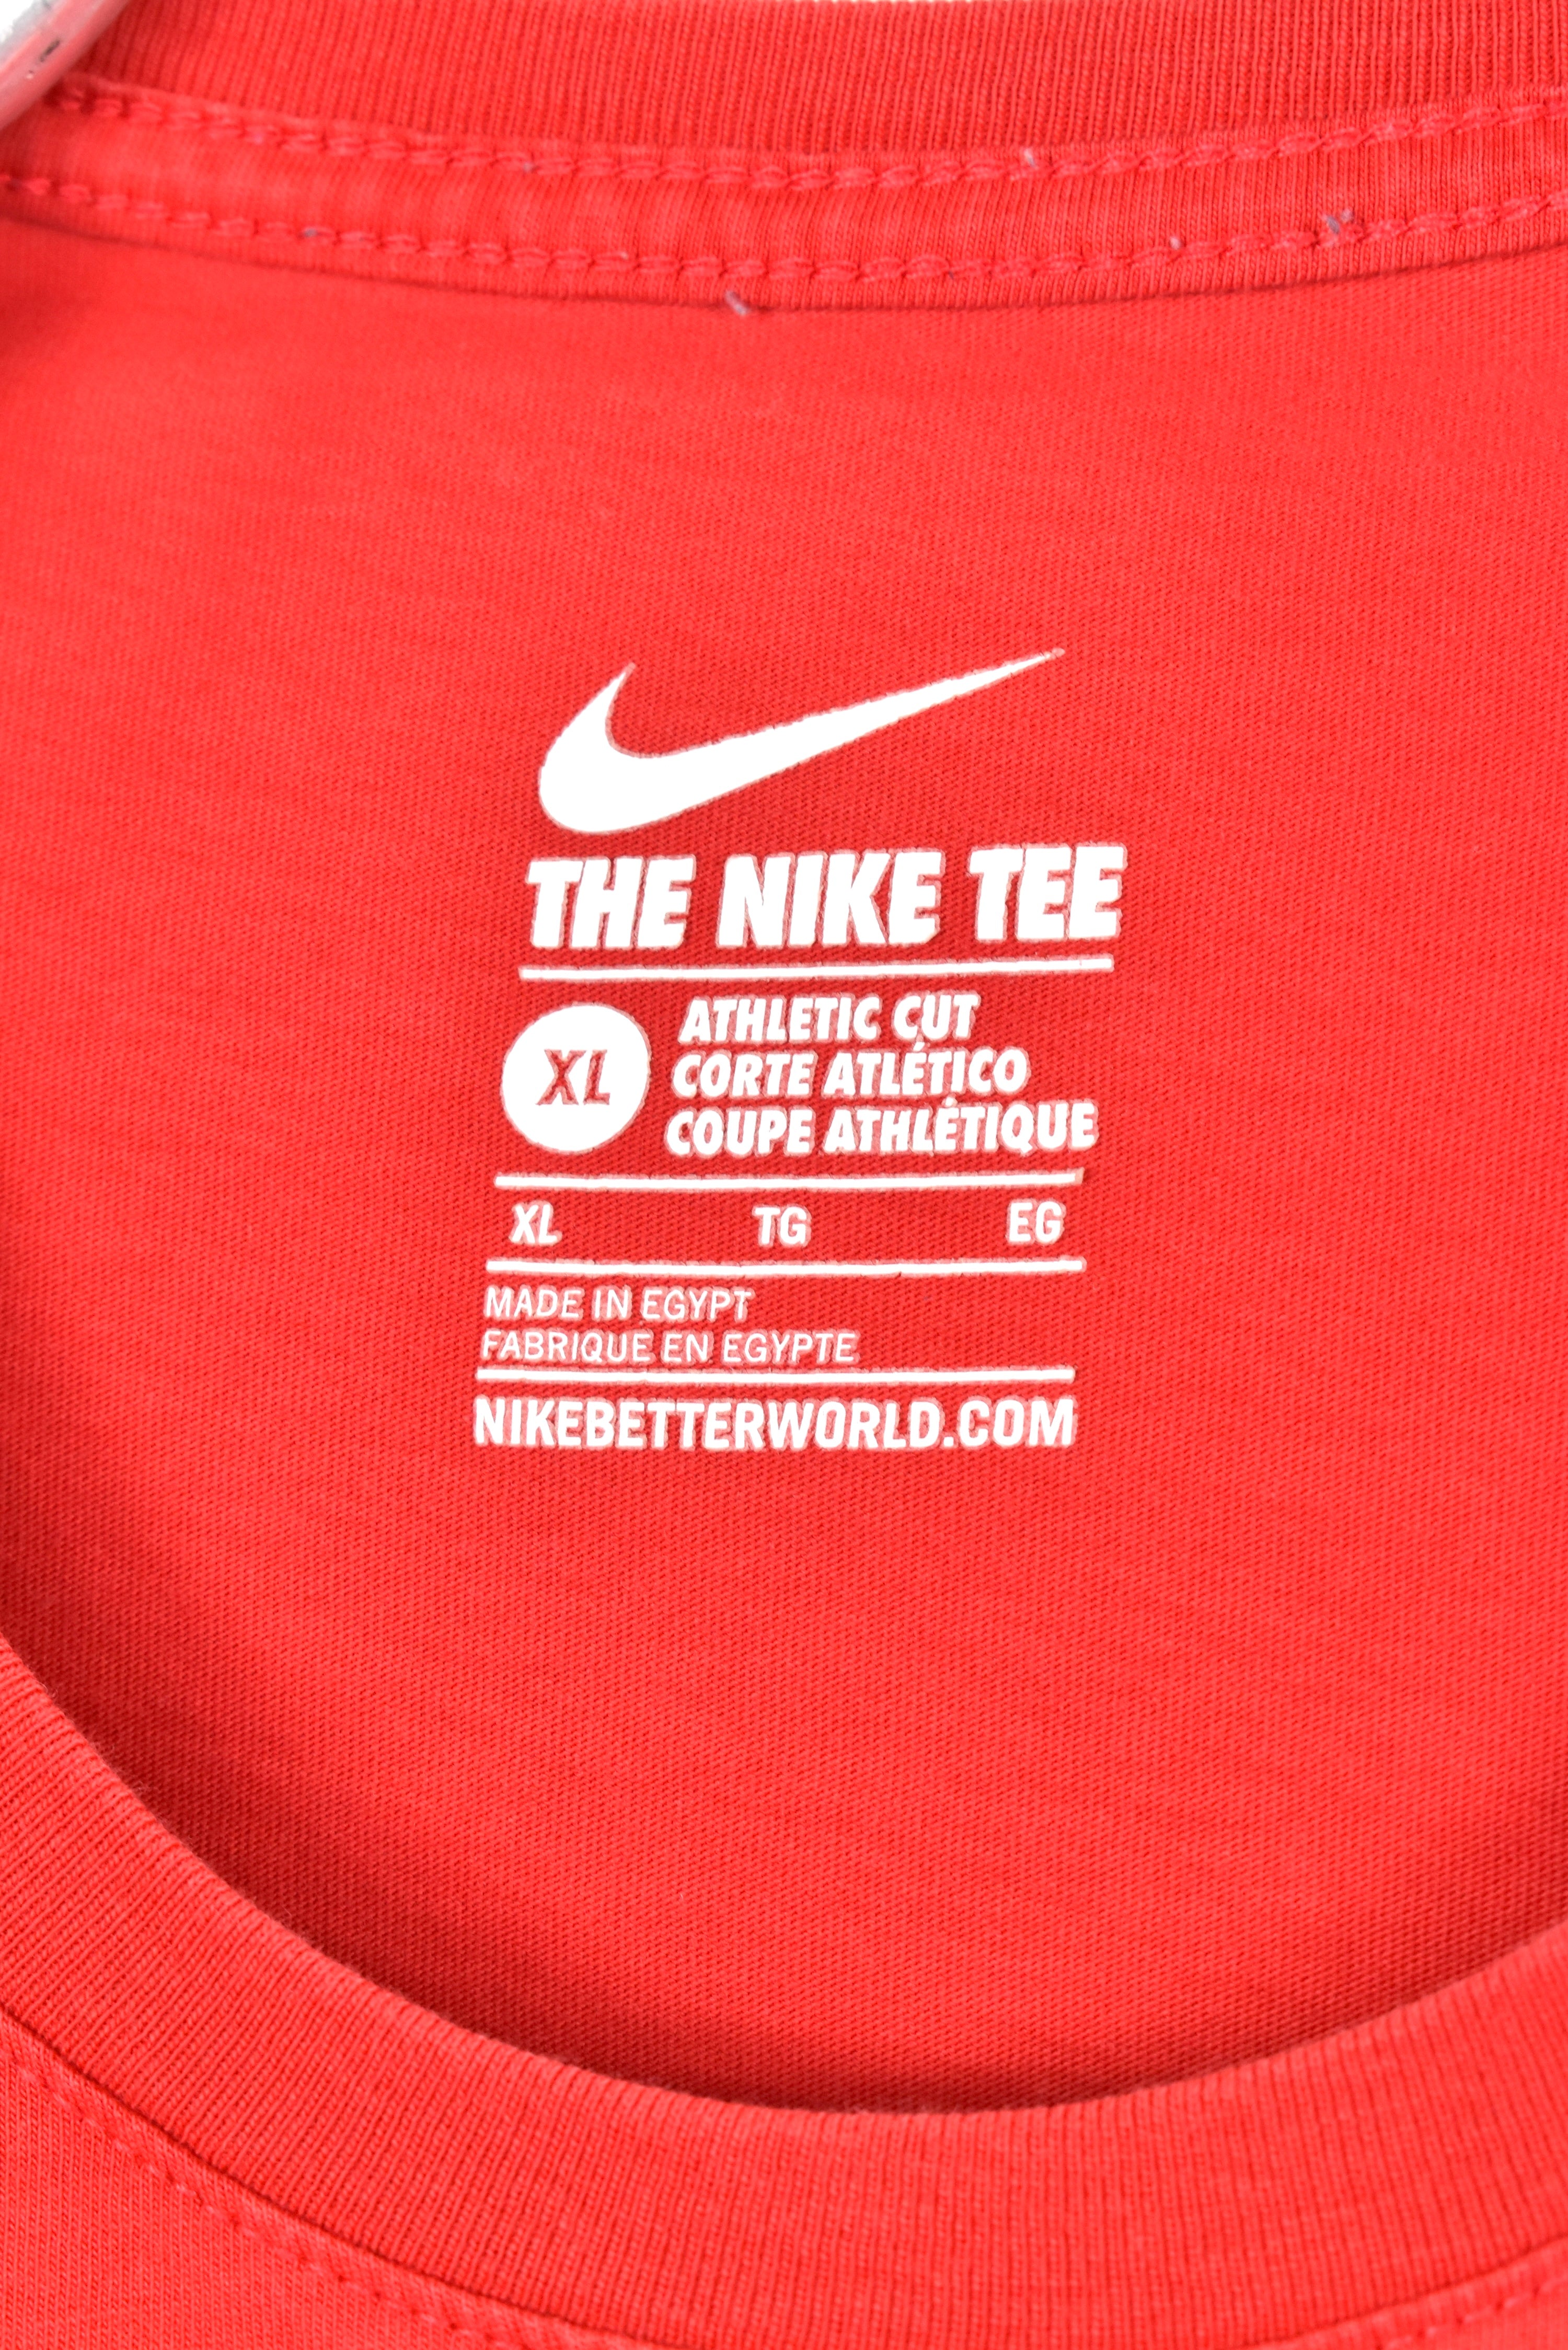 Modern Nike shirt, red graphic tee - AU XL NIKE